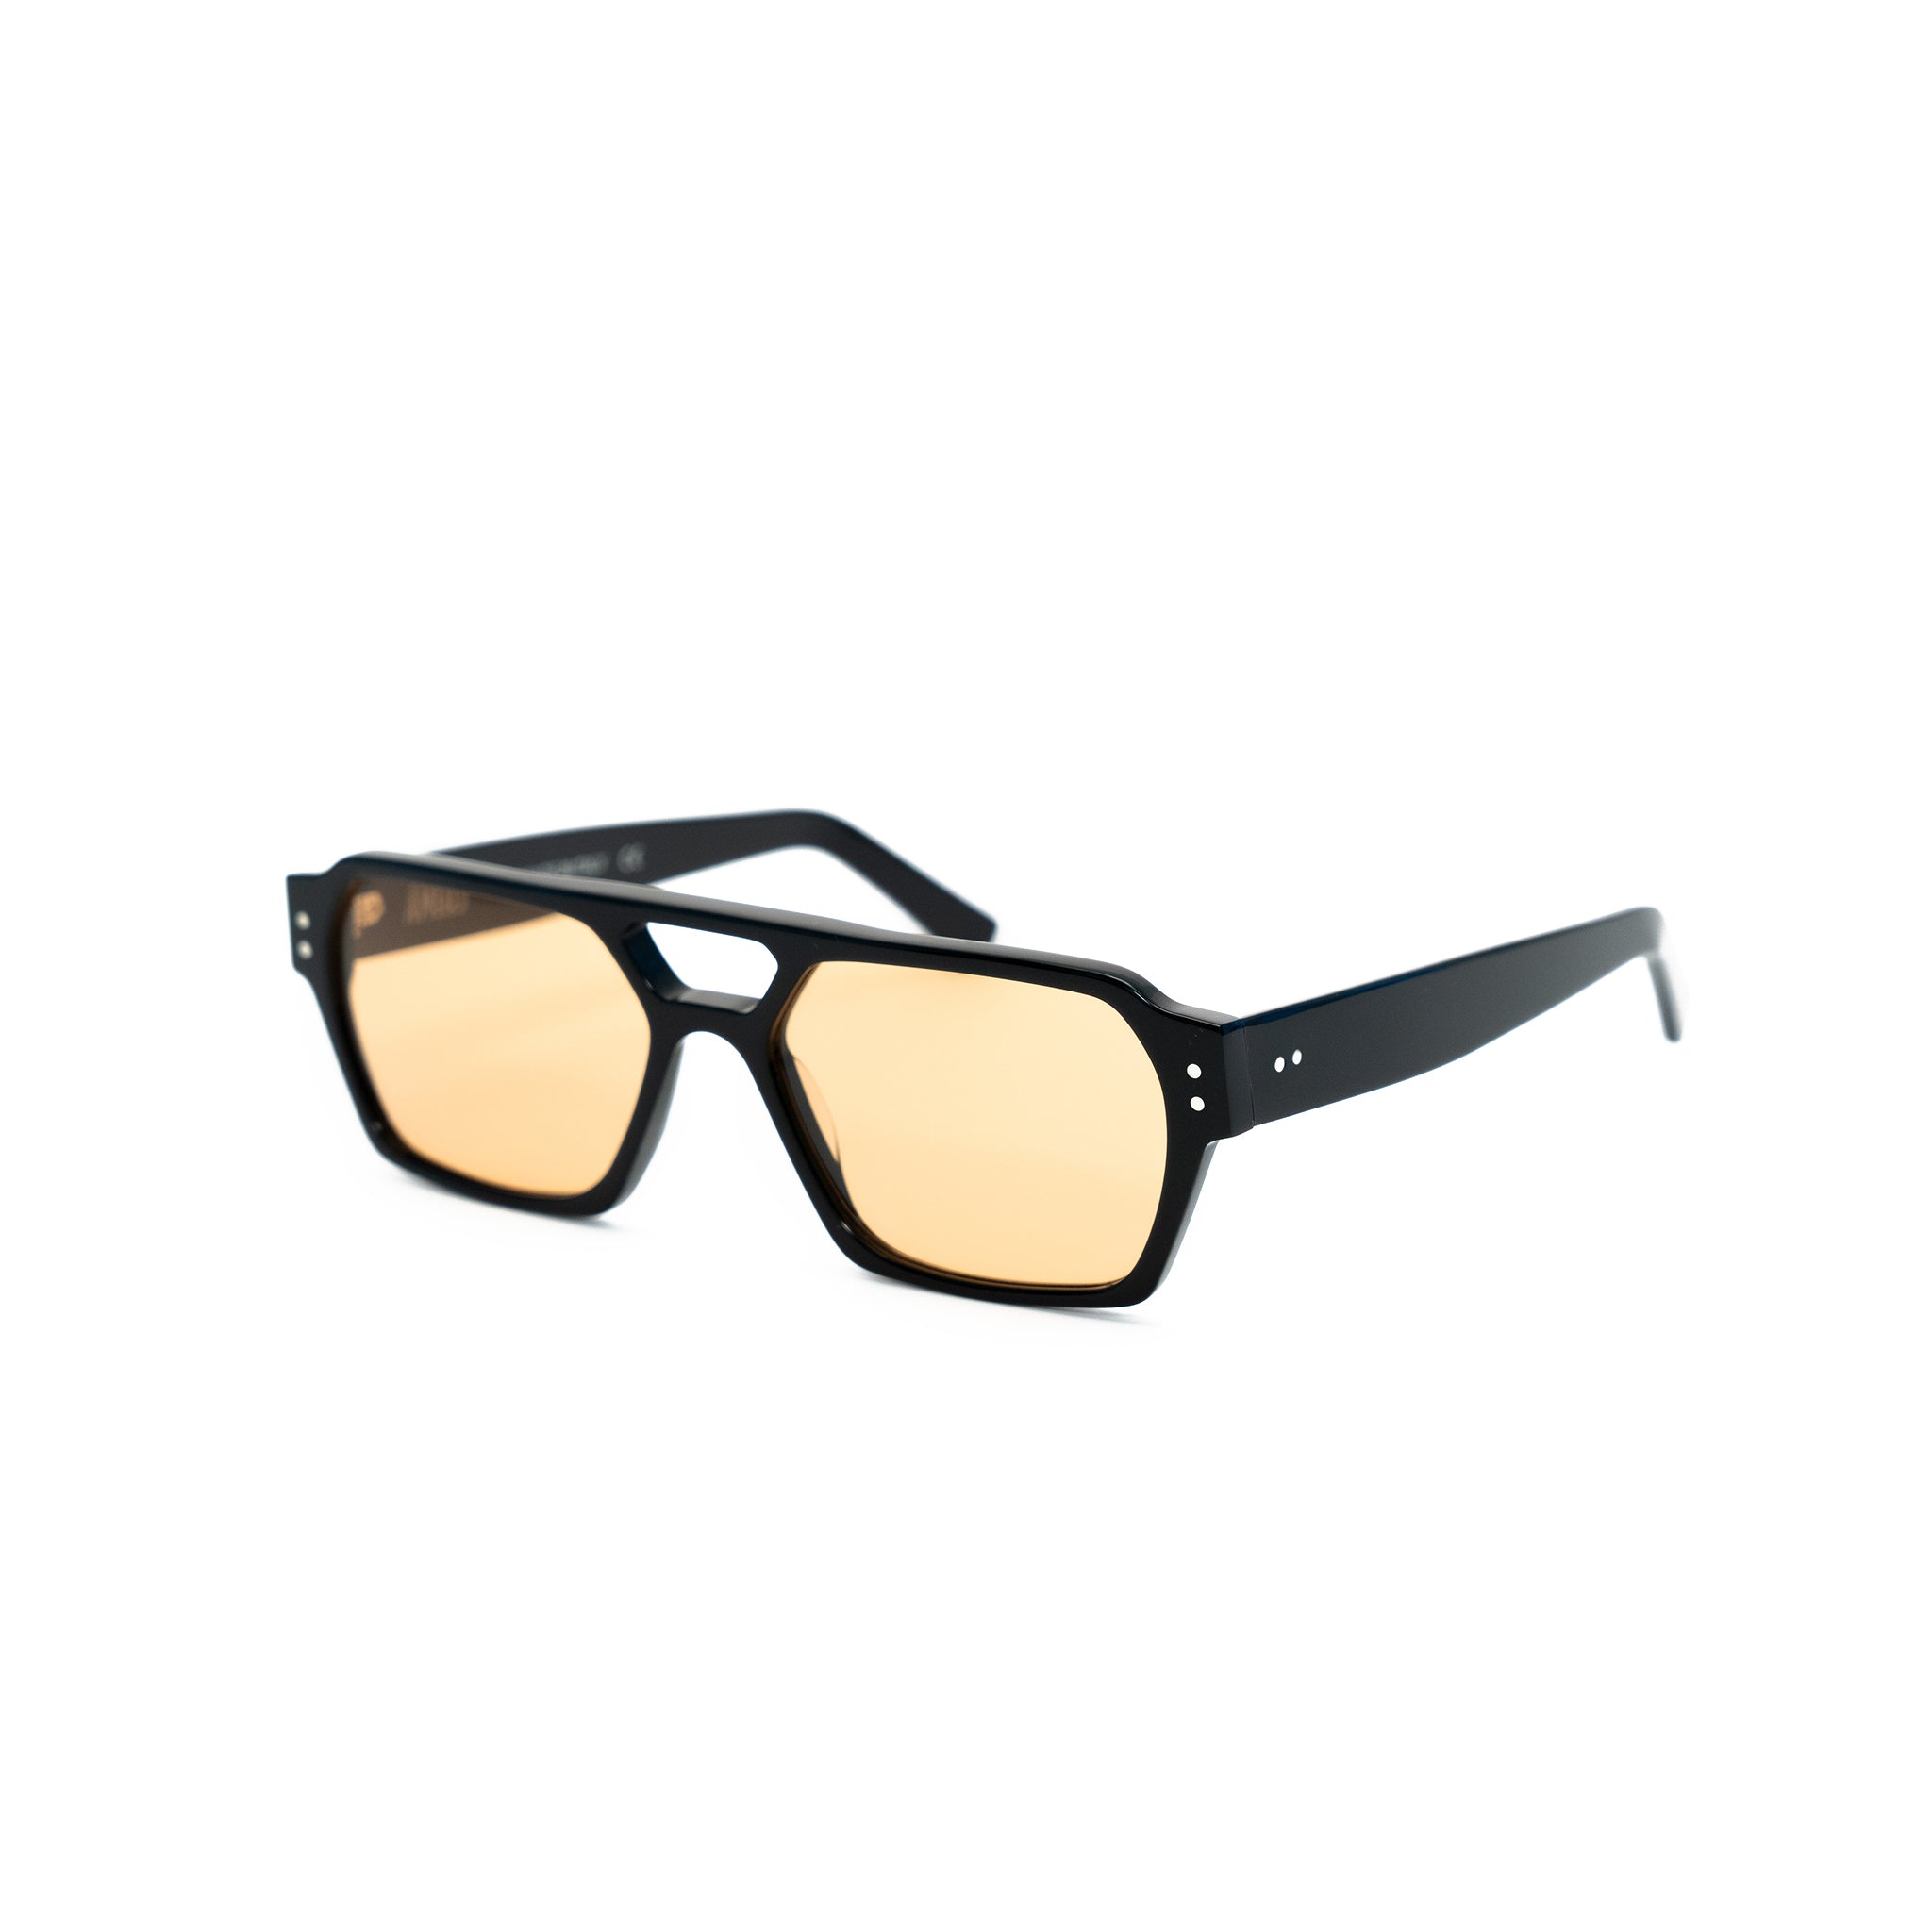 Ameos Identity collection Ego model. Black frames with orange lenses. Side view. Genderless, gender neutral eyewear